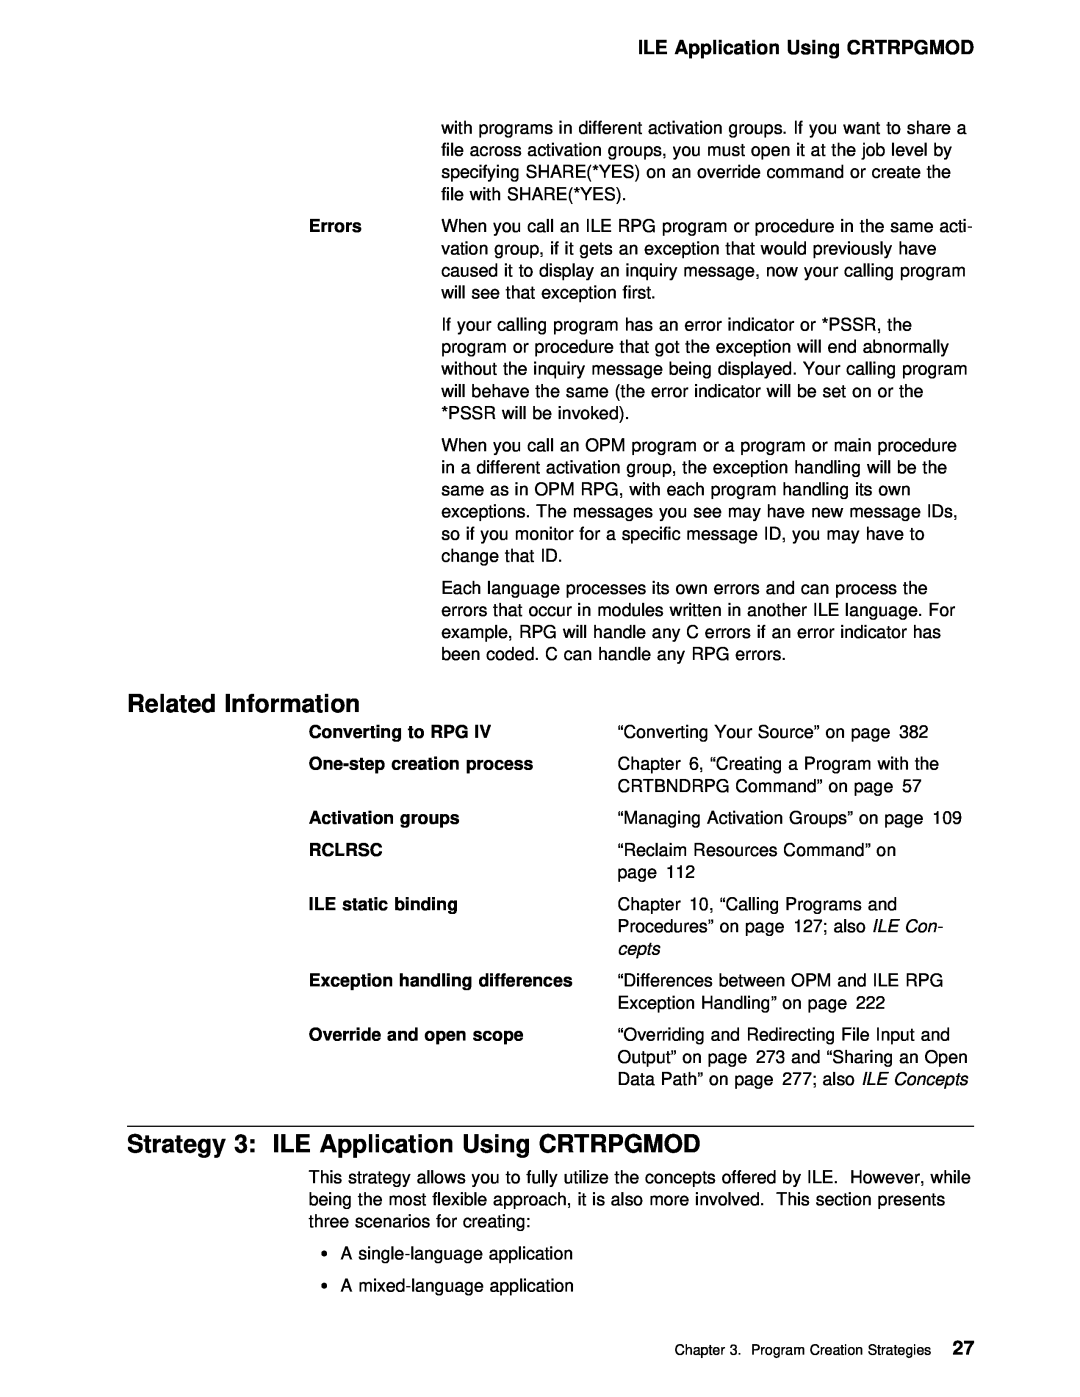 IBM AS/400 manual Crtrpgmod, Strategy 3 ILE Application, ILE Application Using CRTRPGMOD, Related Information 